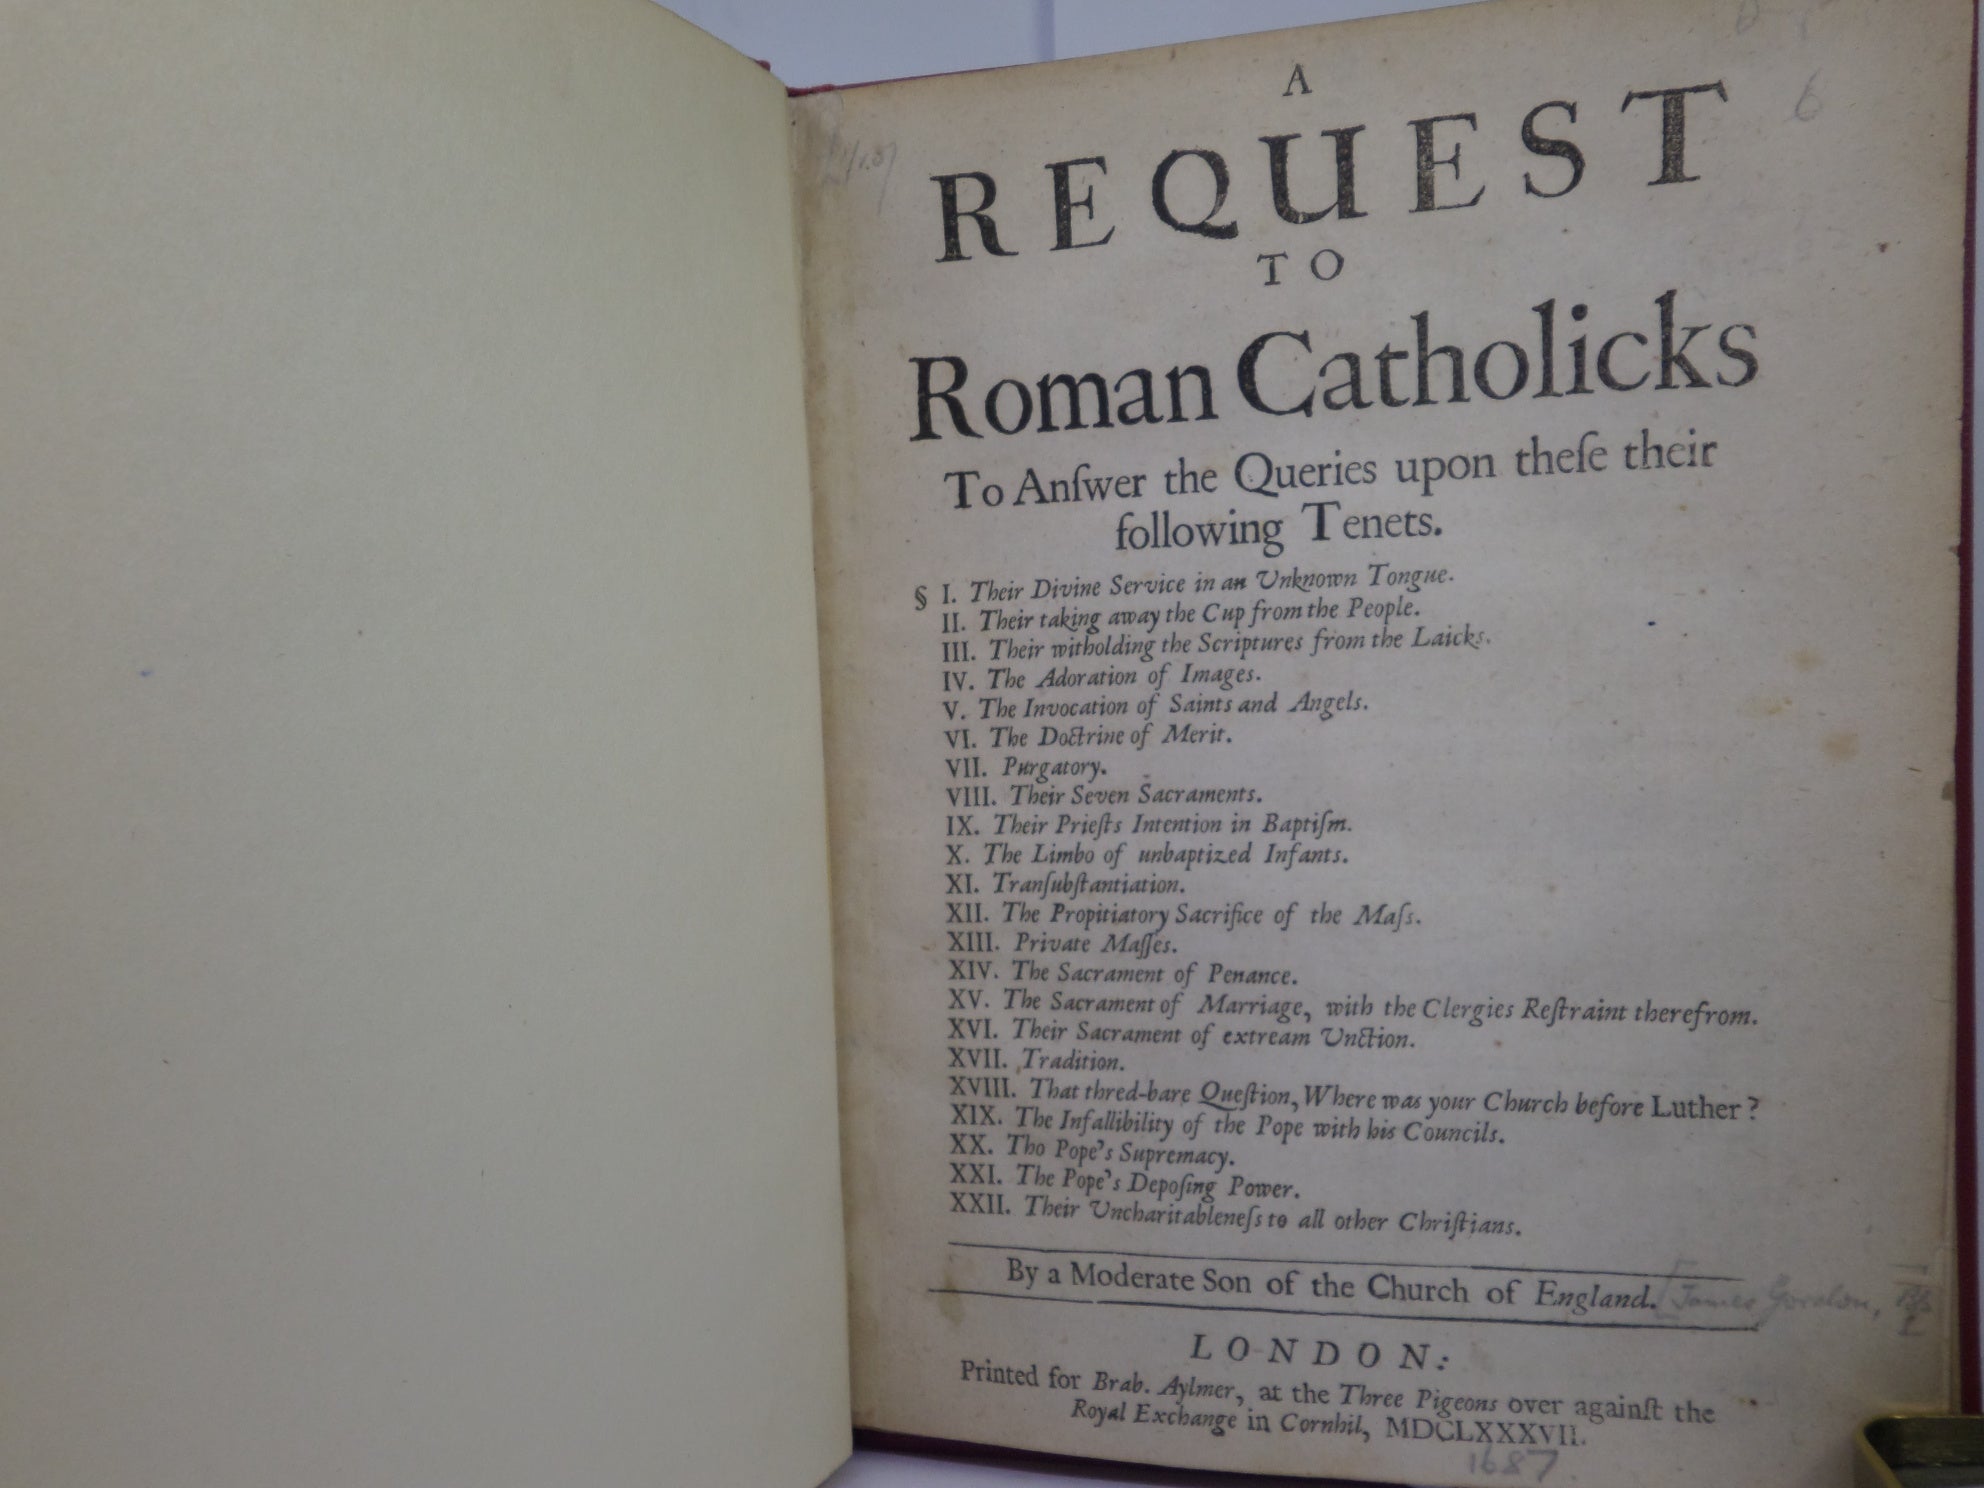 A REQUEST TO ROMAN CATHOLICKS BY JAMES GORDON 1687